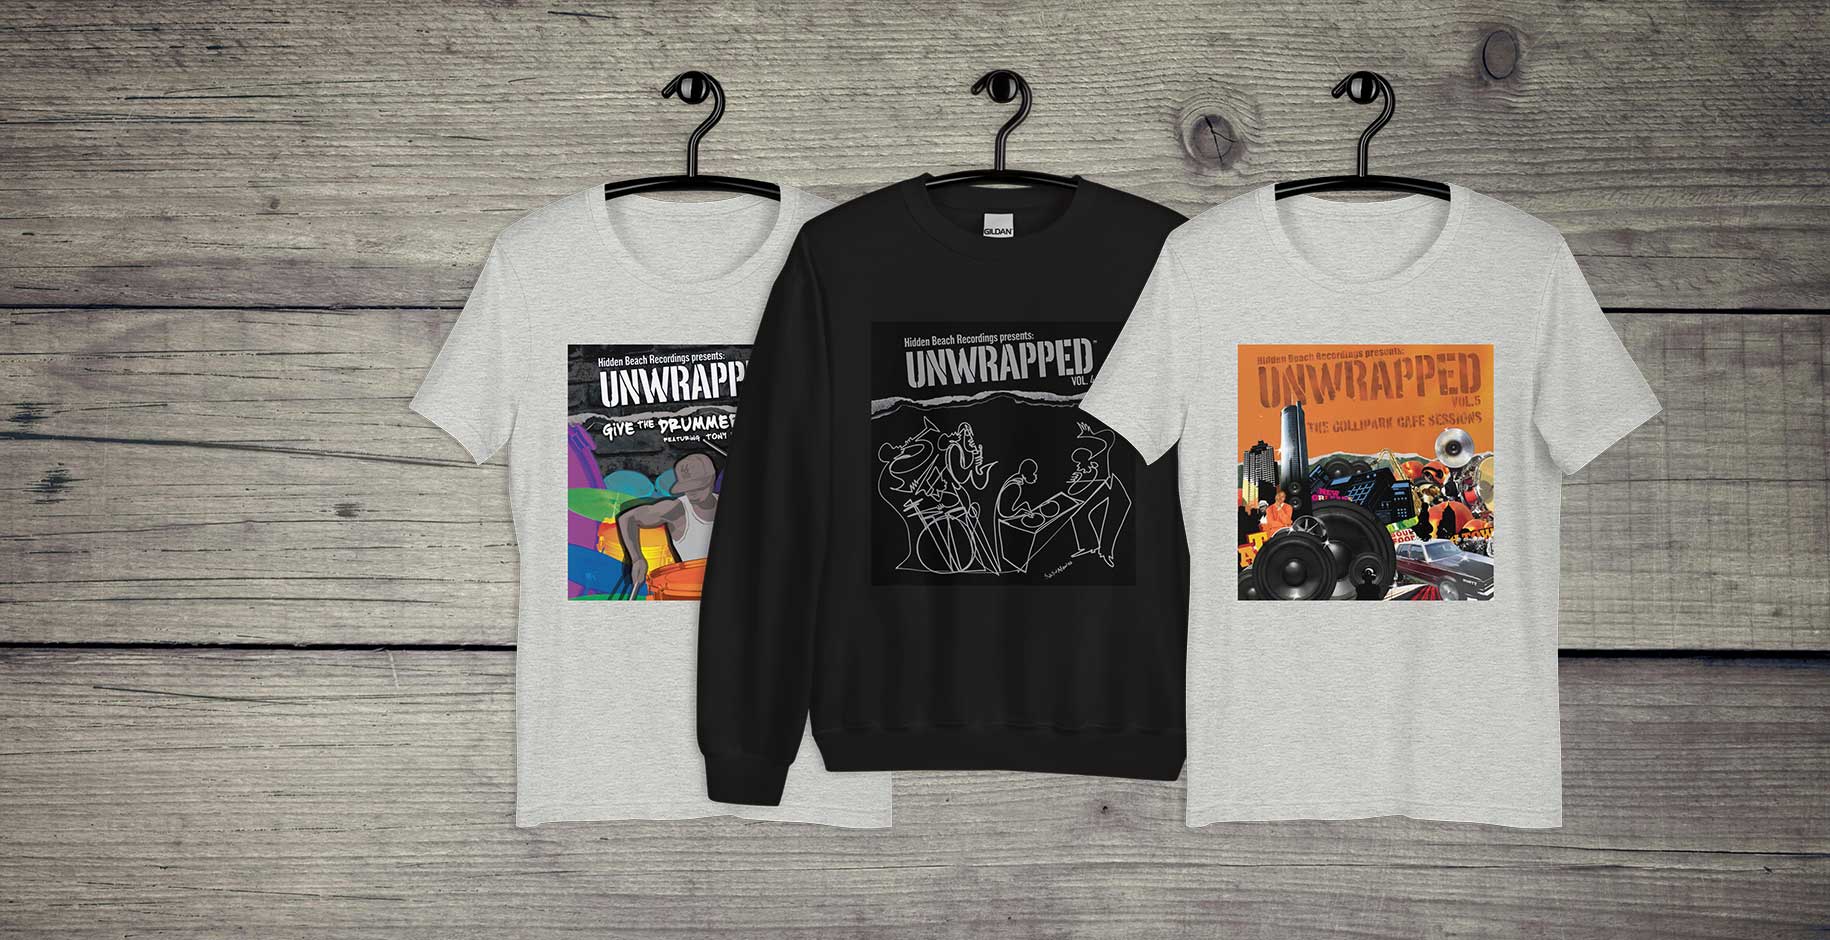 Unwrapped T shirts and Sweatshirts